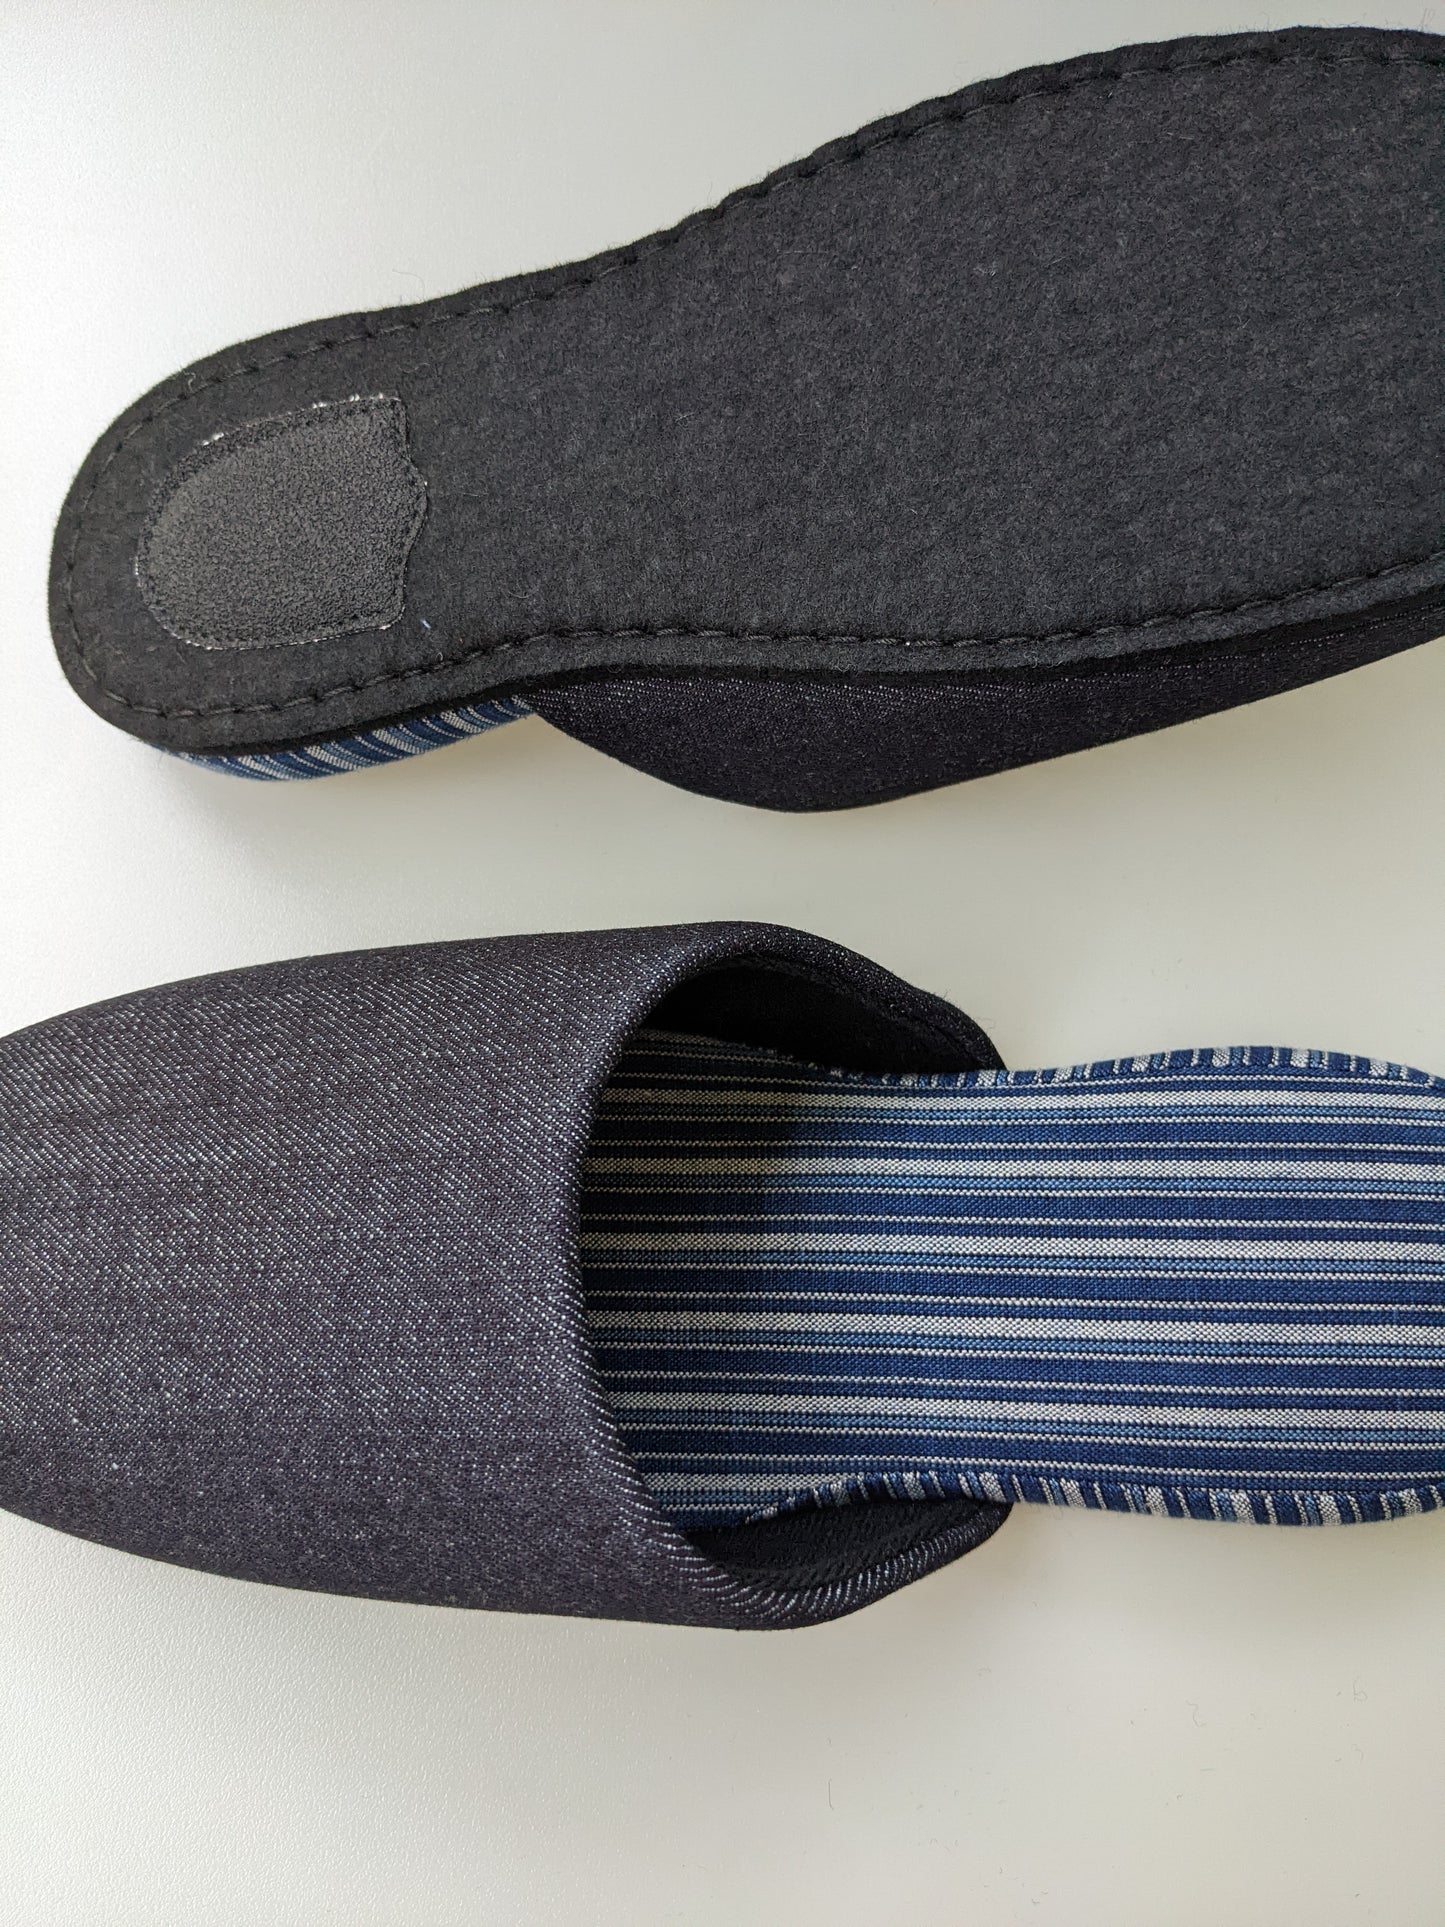 Denim Stripe Mix Slippers [Black wool felt sole] (Japan Blue Stripe B) 3 size Medium / Large / XL